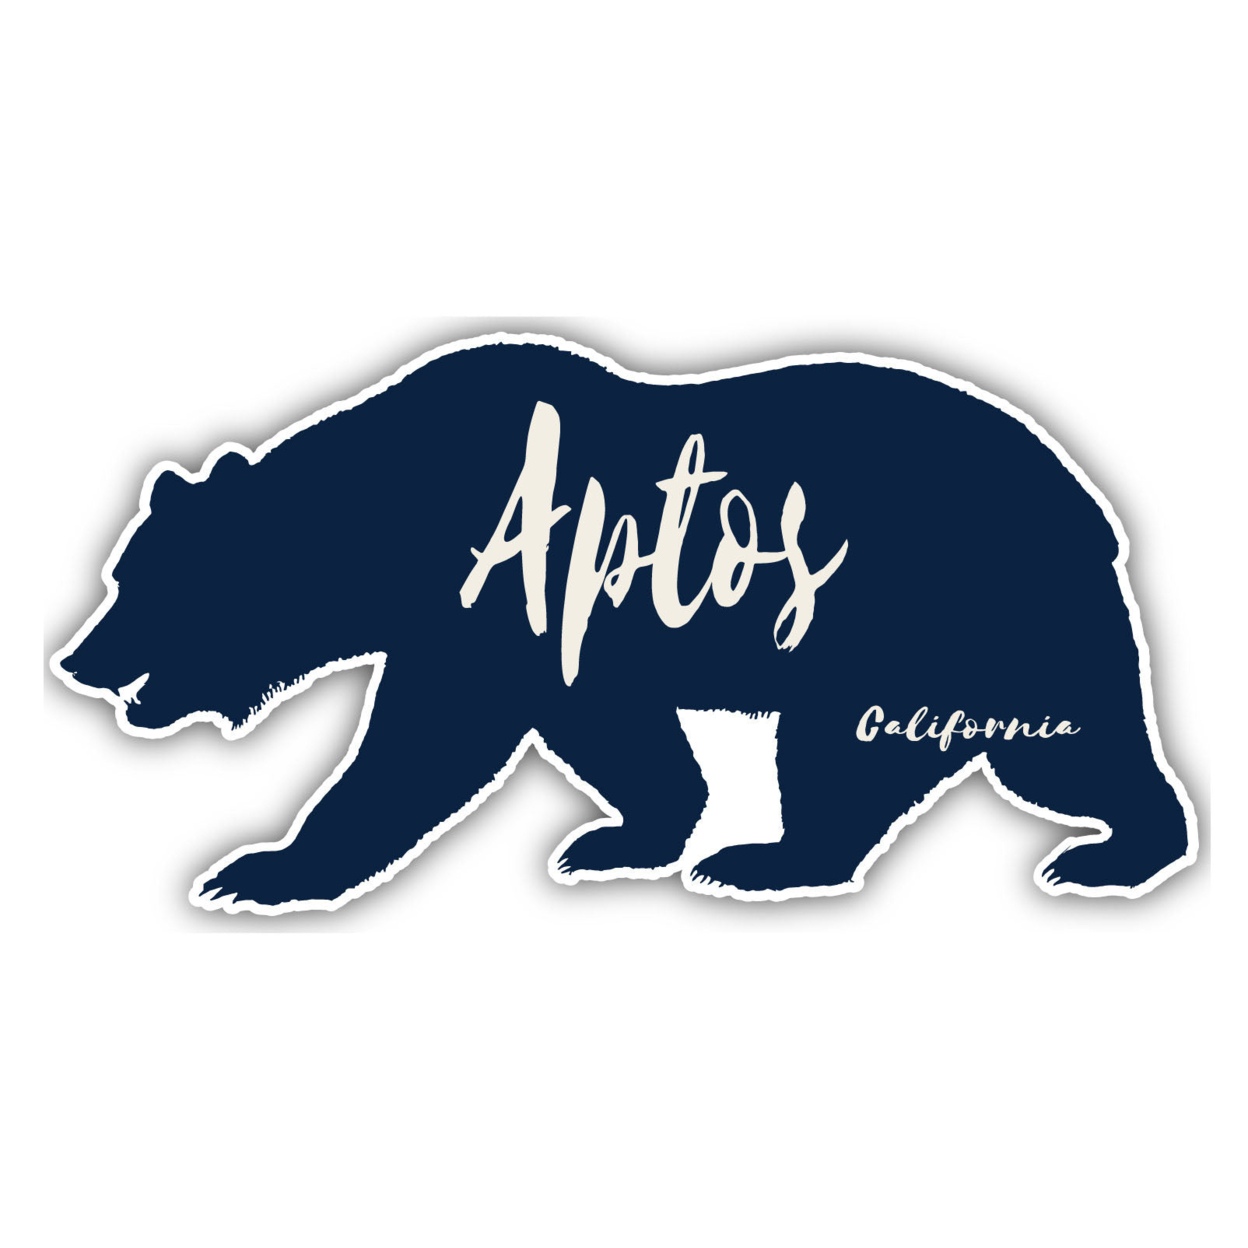 Aptos California Souvenir Decorative Stickers (Choose Theme And Size) - 4-Pack, 12-Inch, Tent